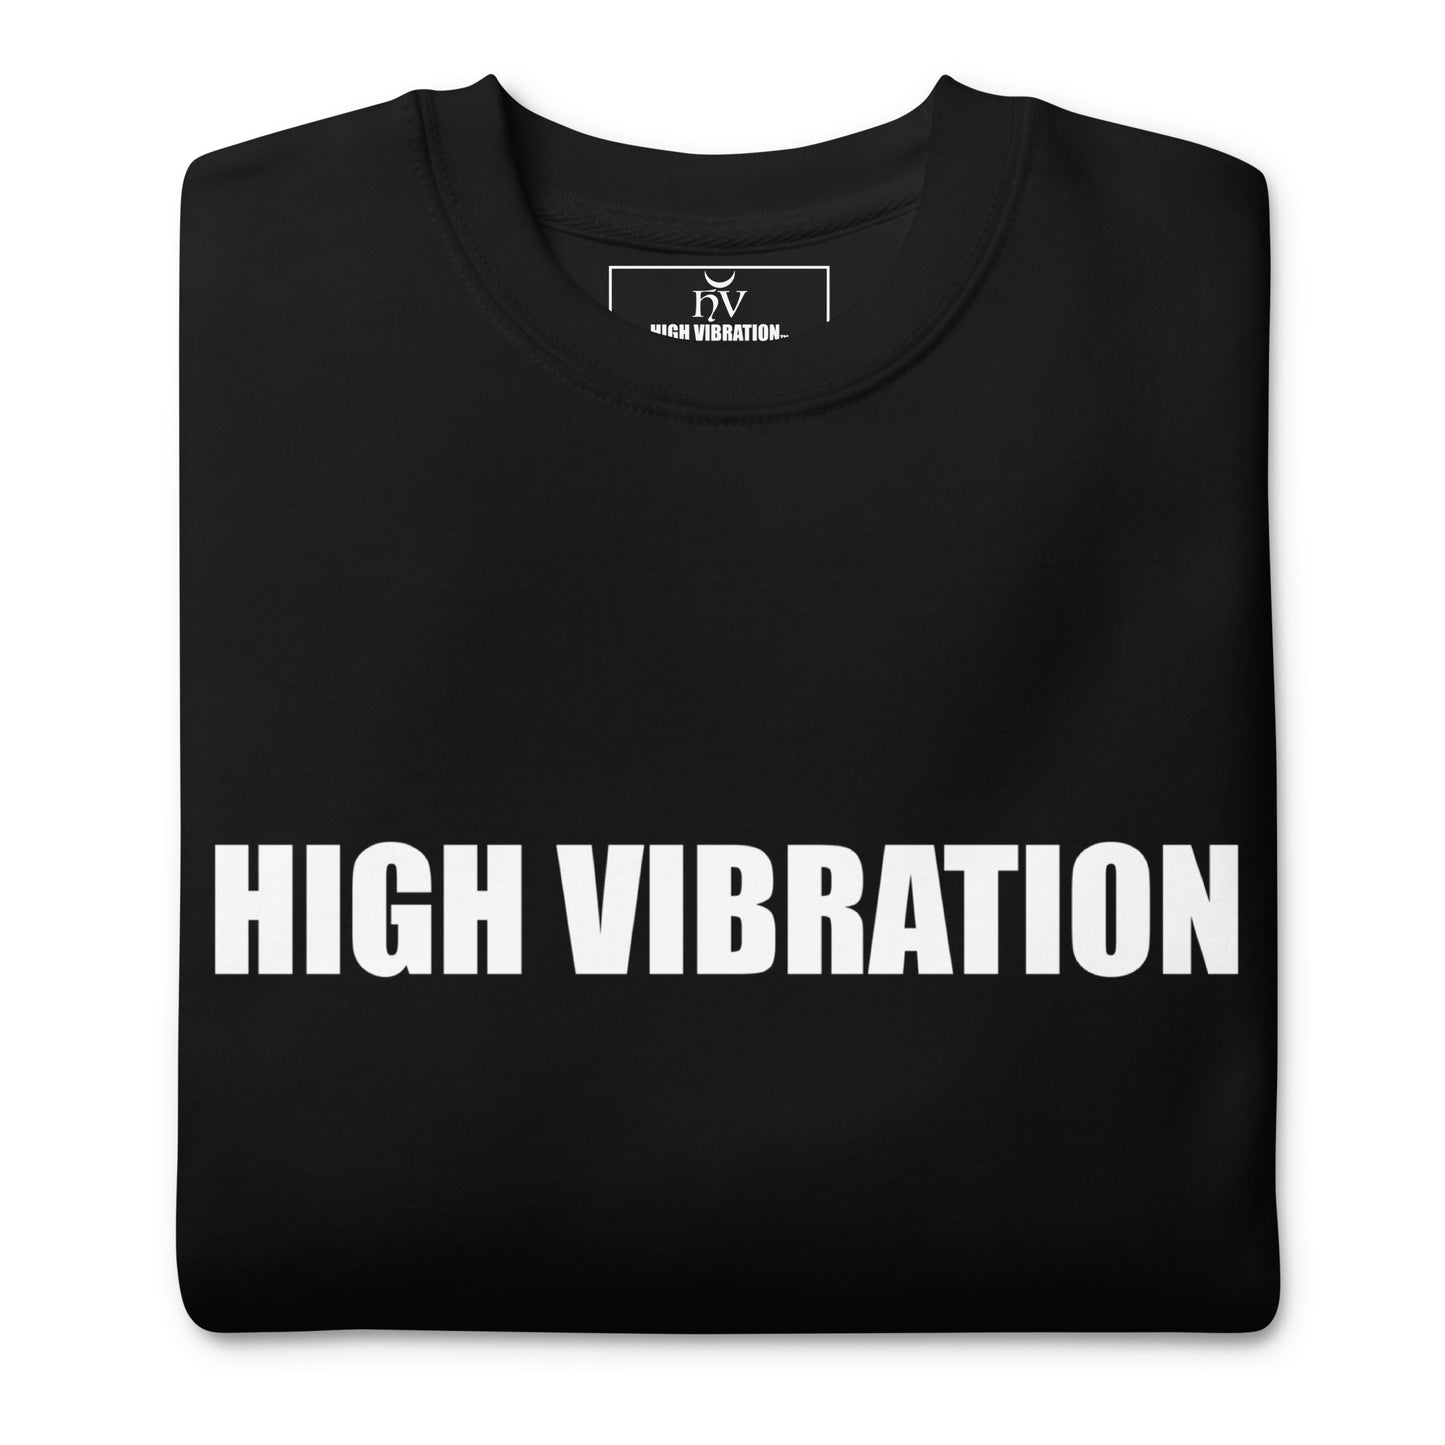 High Vibration- Unisex Sweatshirt